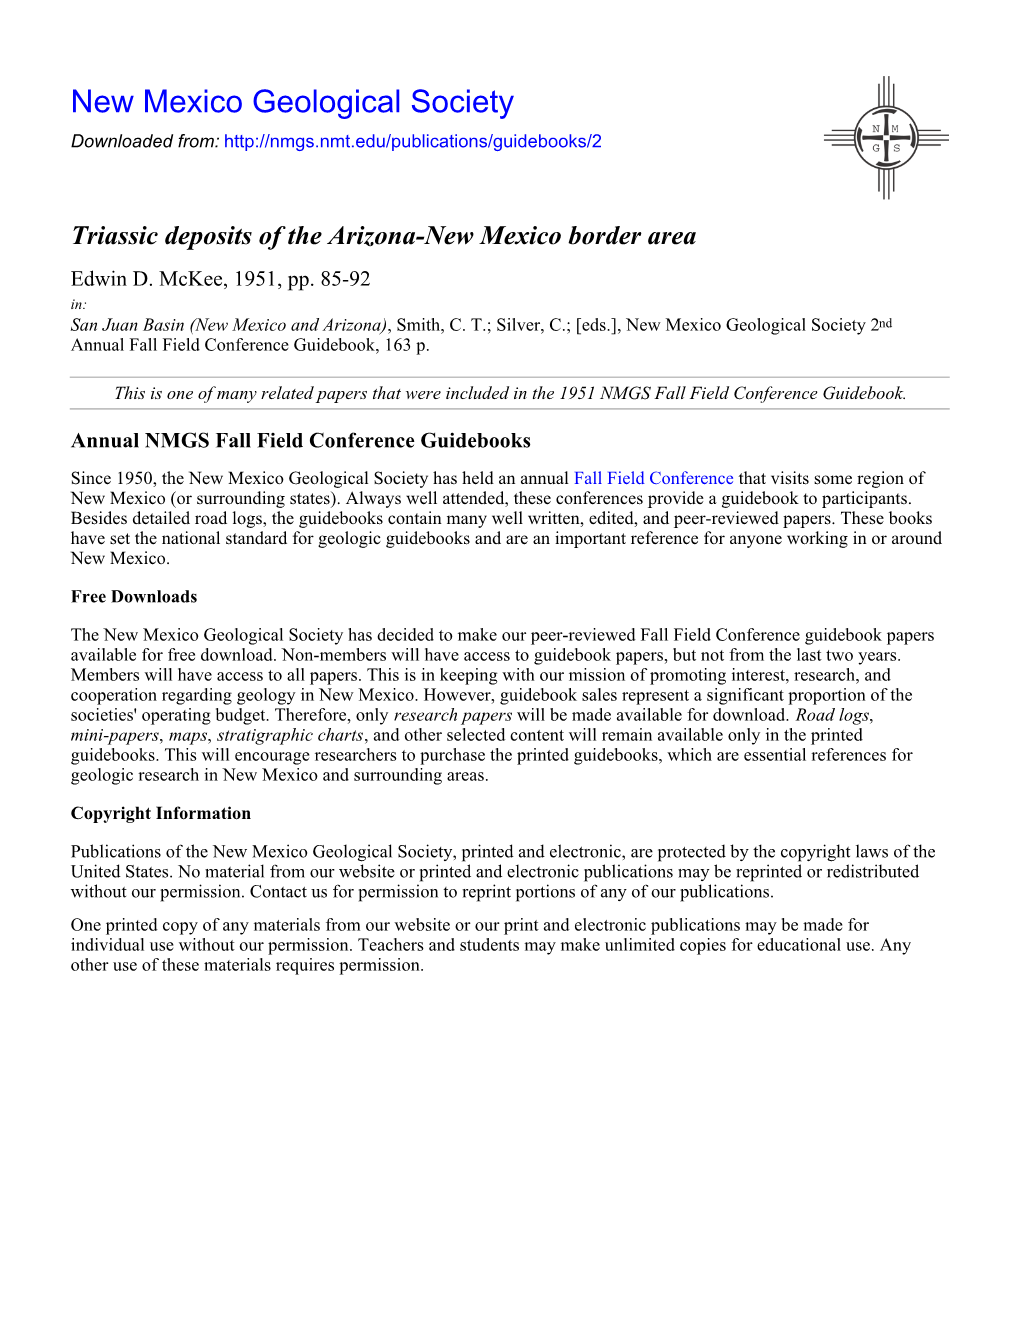 Triassic Deposits of the Arizona-New Mexico Border Area Edwin D